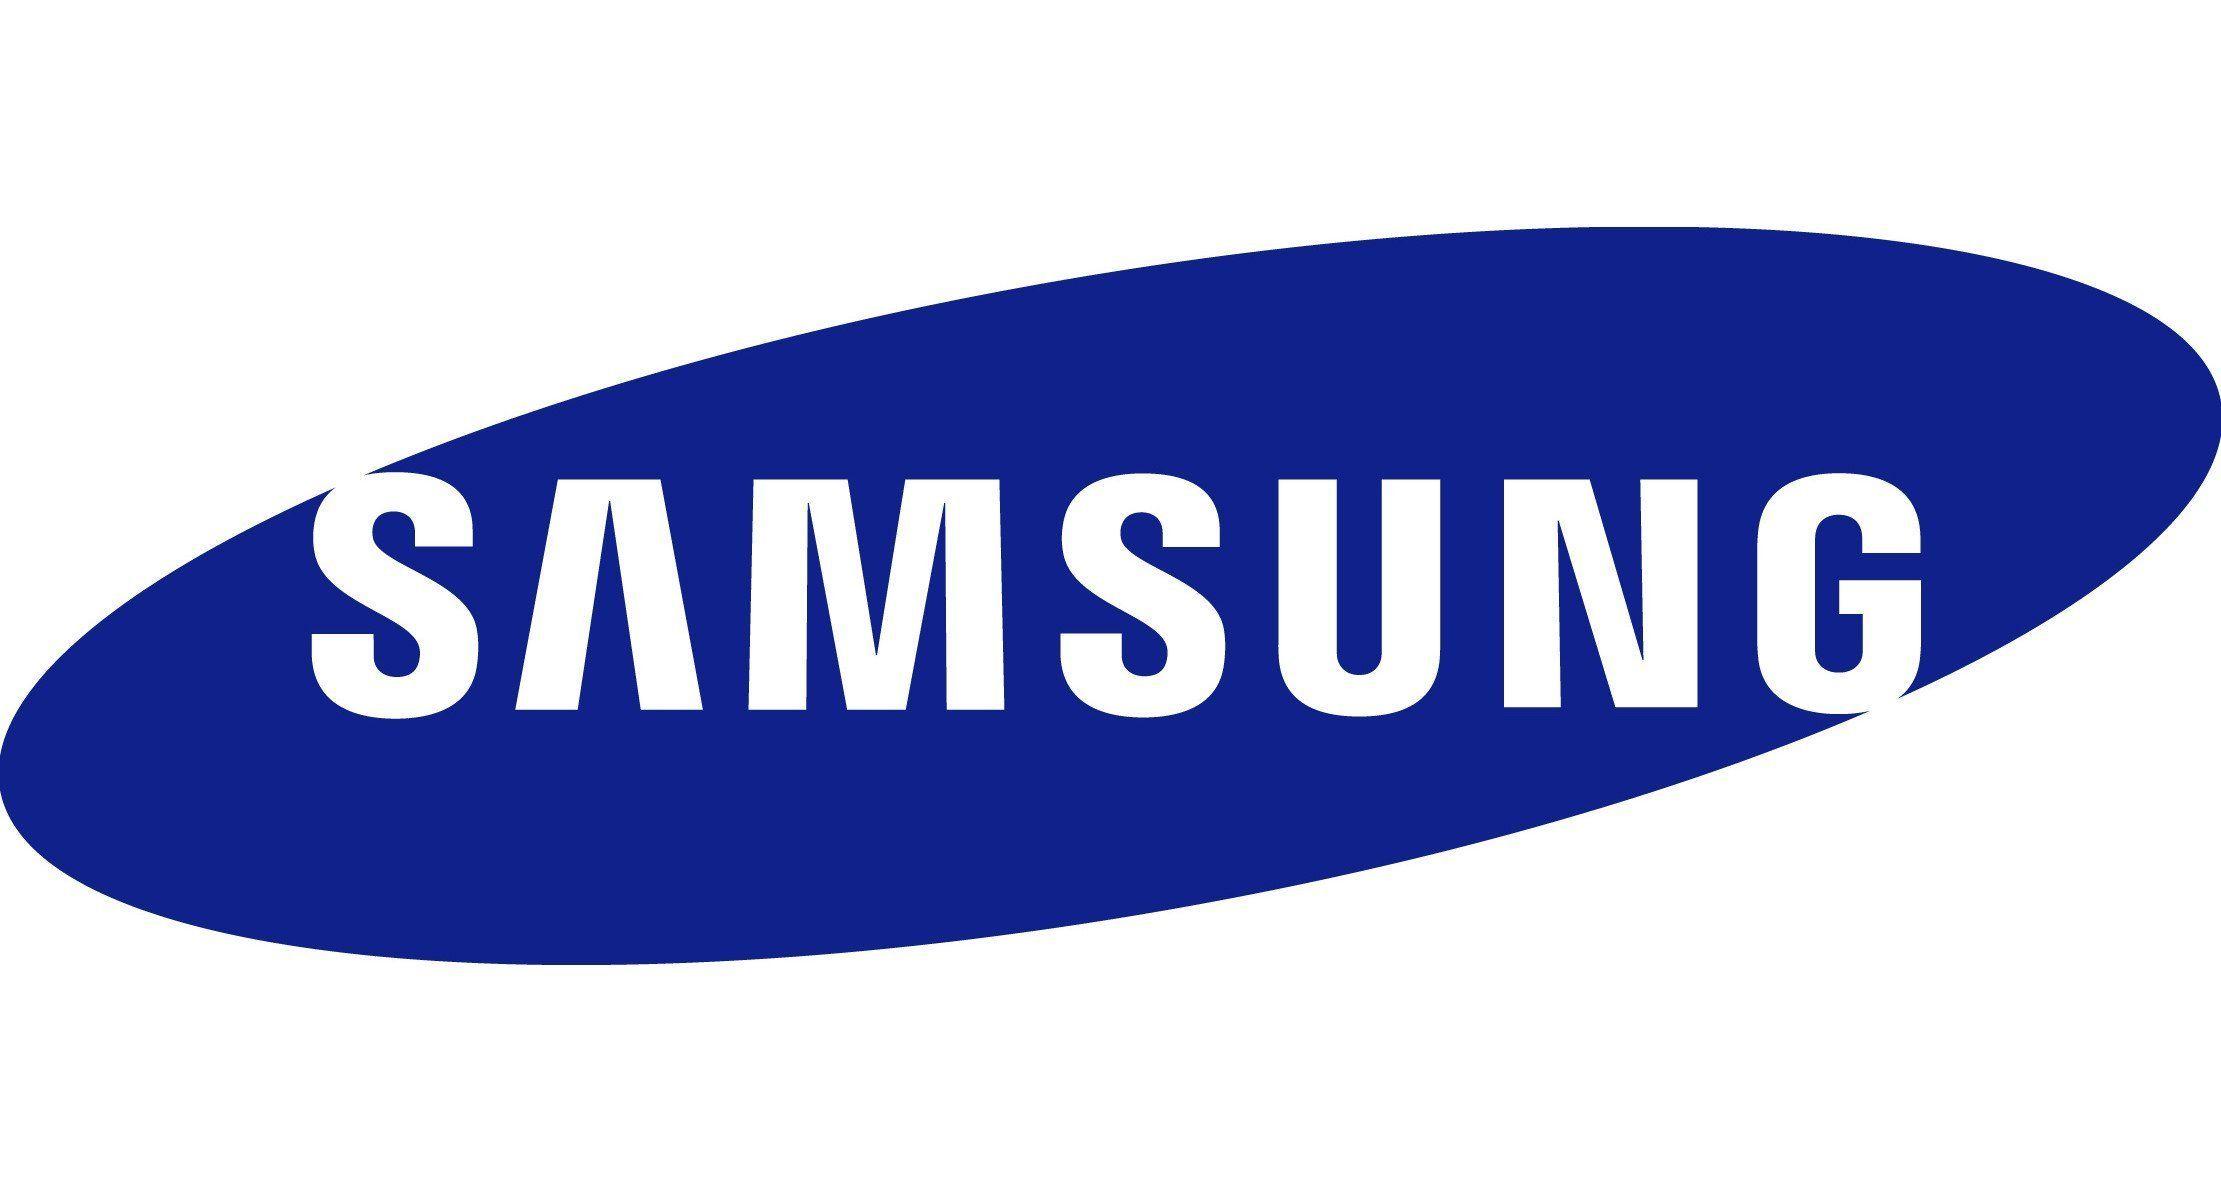 Samsung Business Logo - samsung logo - Market Business News